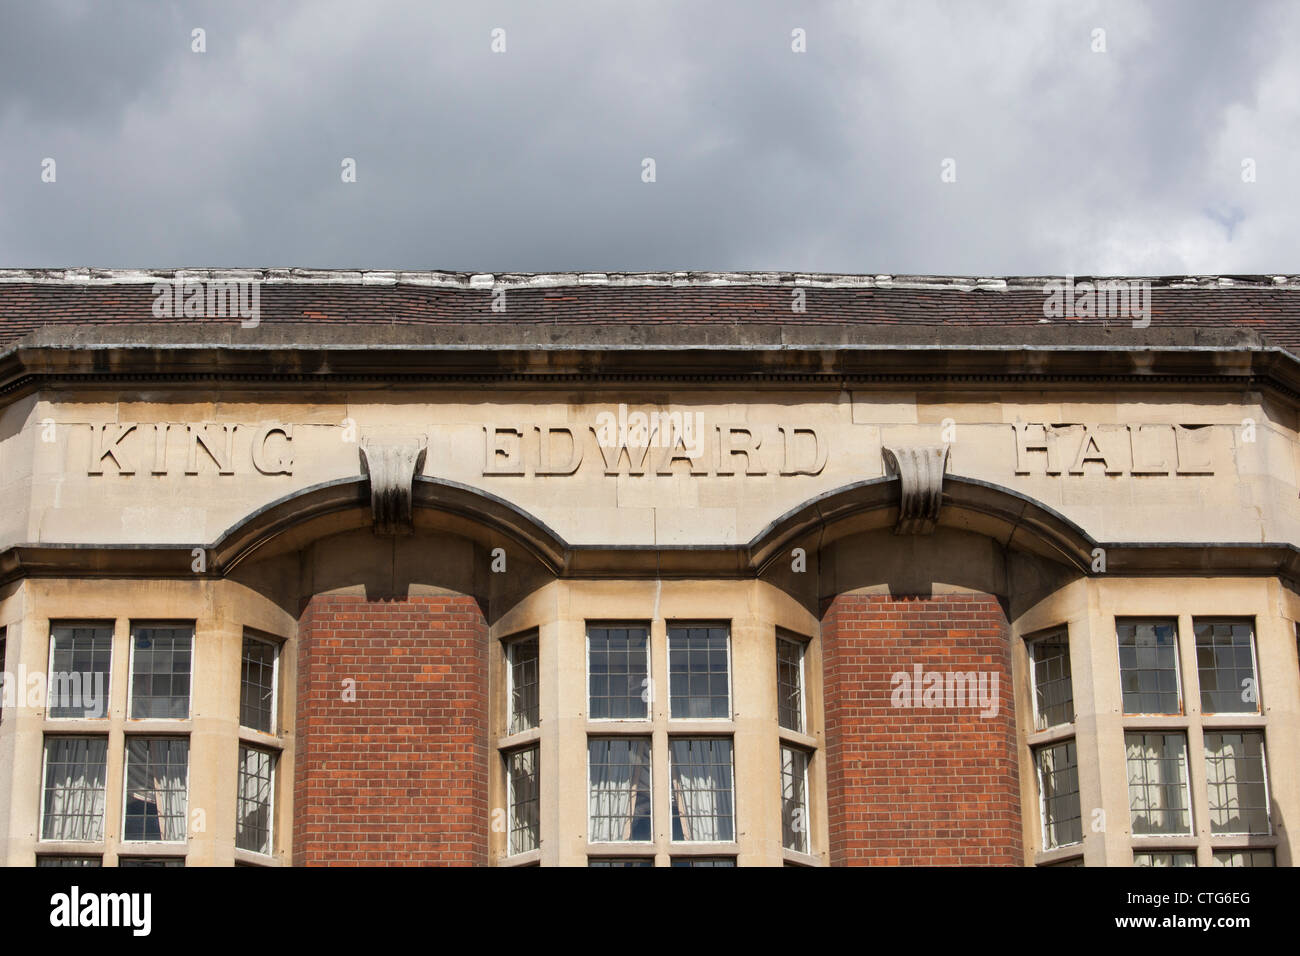 King Edward Hall, Finchley, London Stock Photo